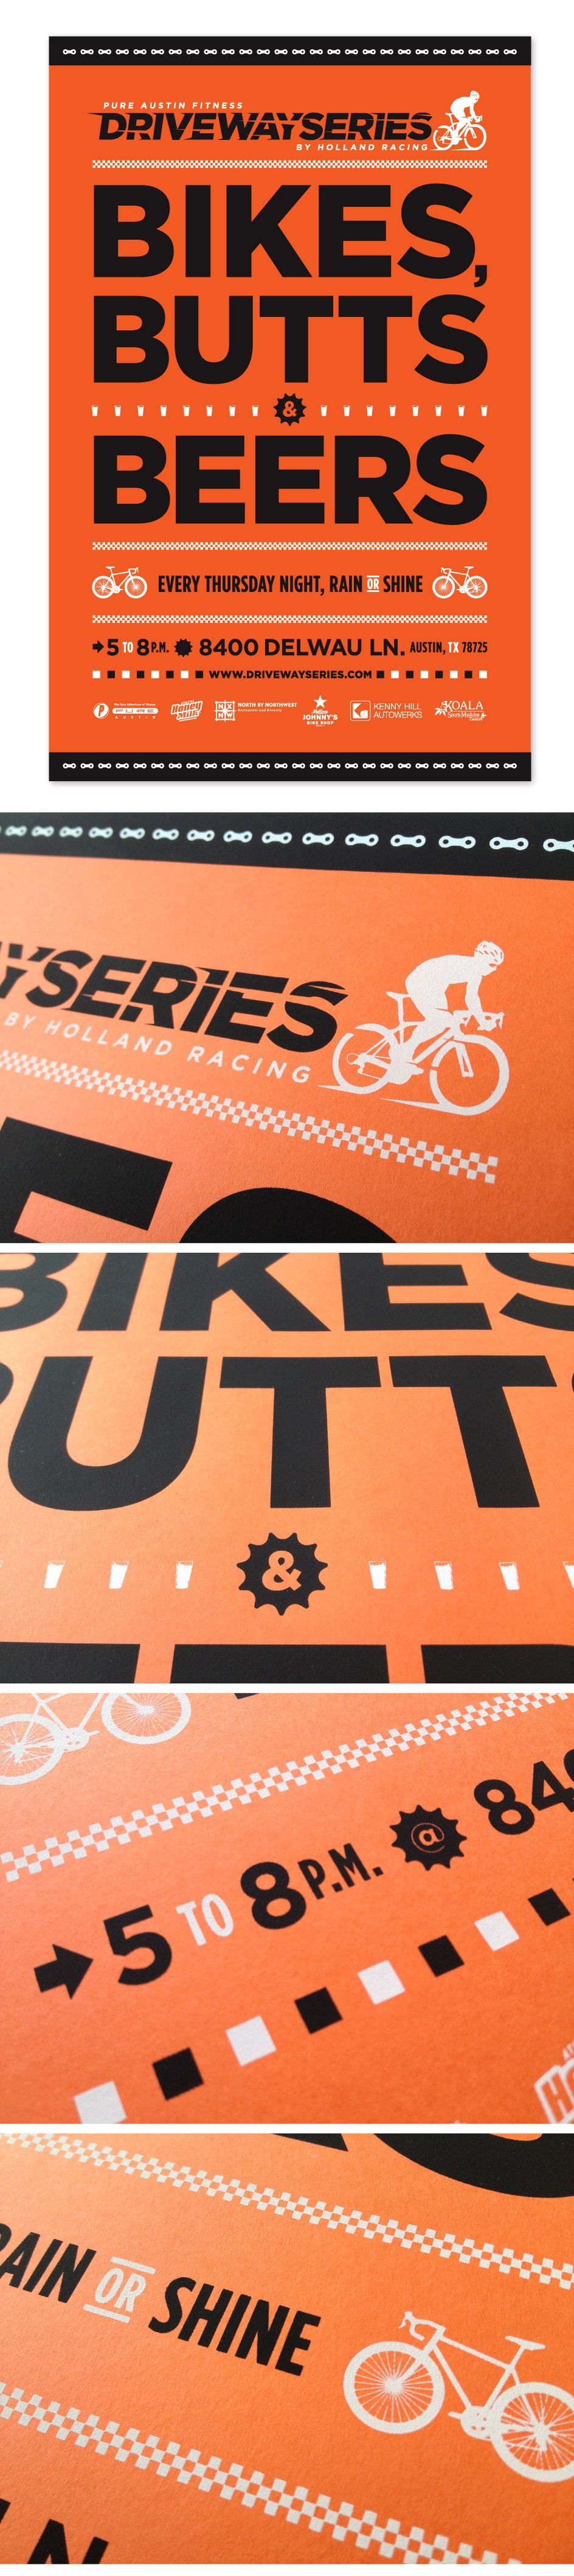 Driveway-Series-Pure-Austin-Mellow-Johnnys-Austin-Texas-Crit-Thursday-Bike-Bicycle-Race-Car-Track-Logo-Branding-Leaders-Jersey-Poster-Identity-Screen-Print